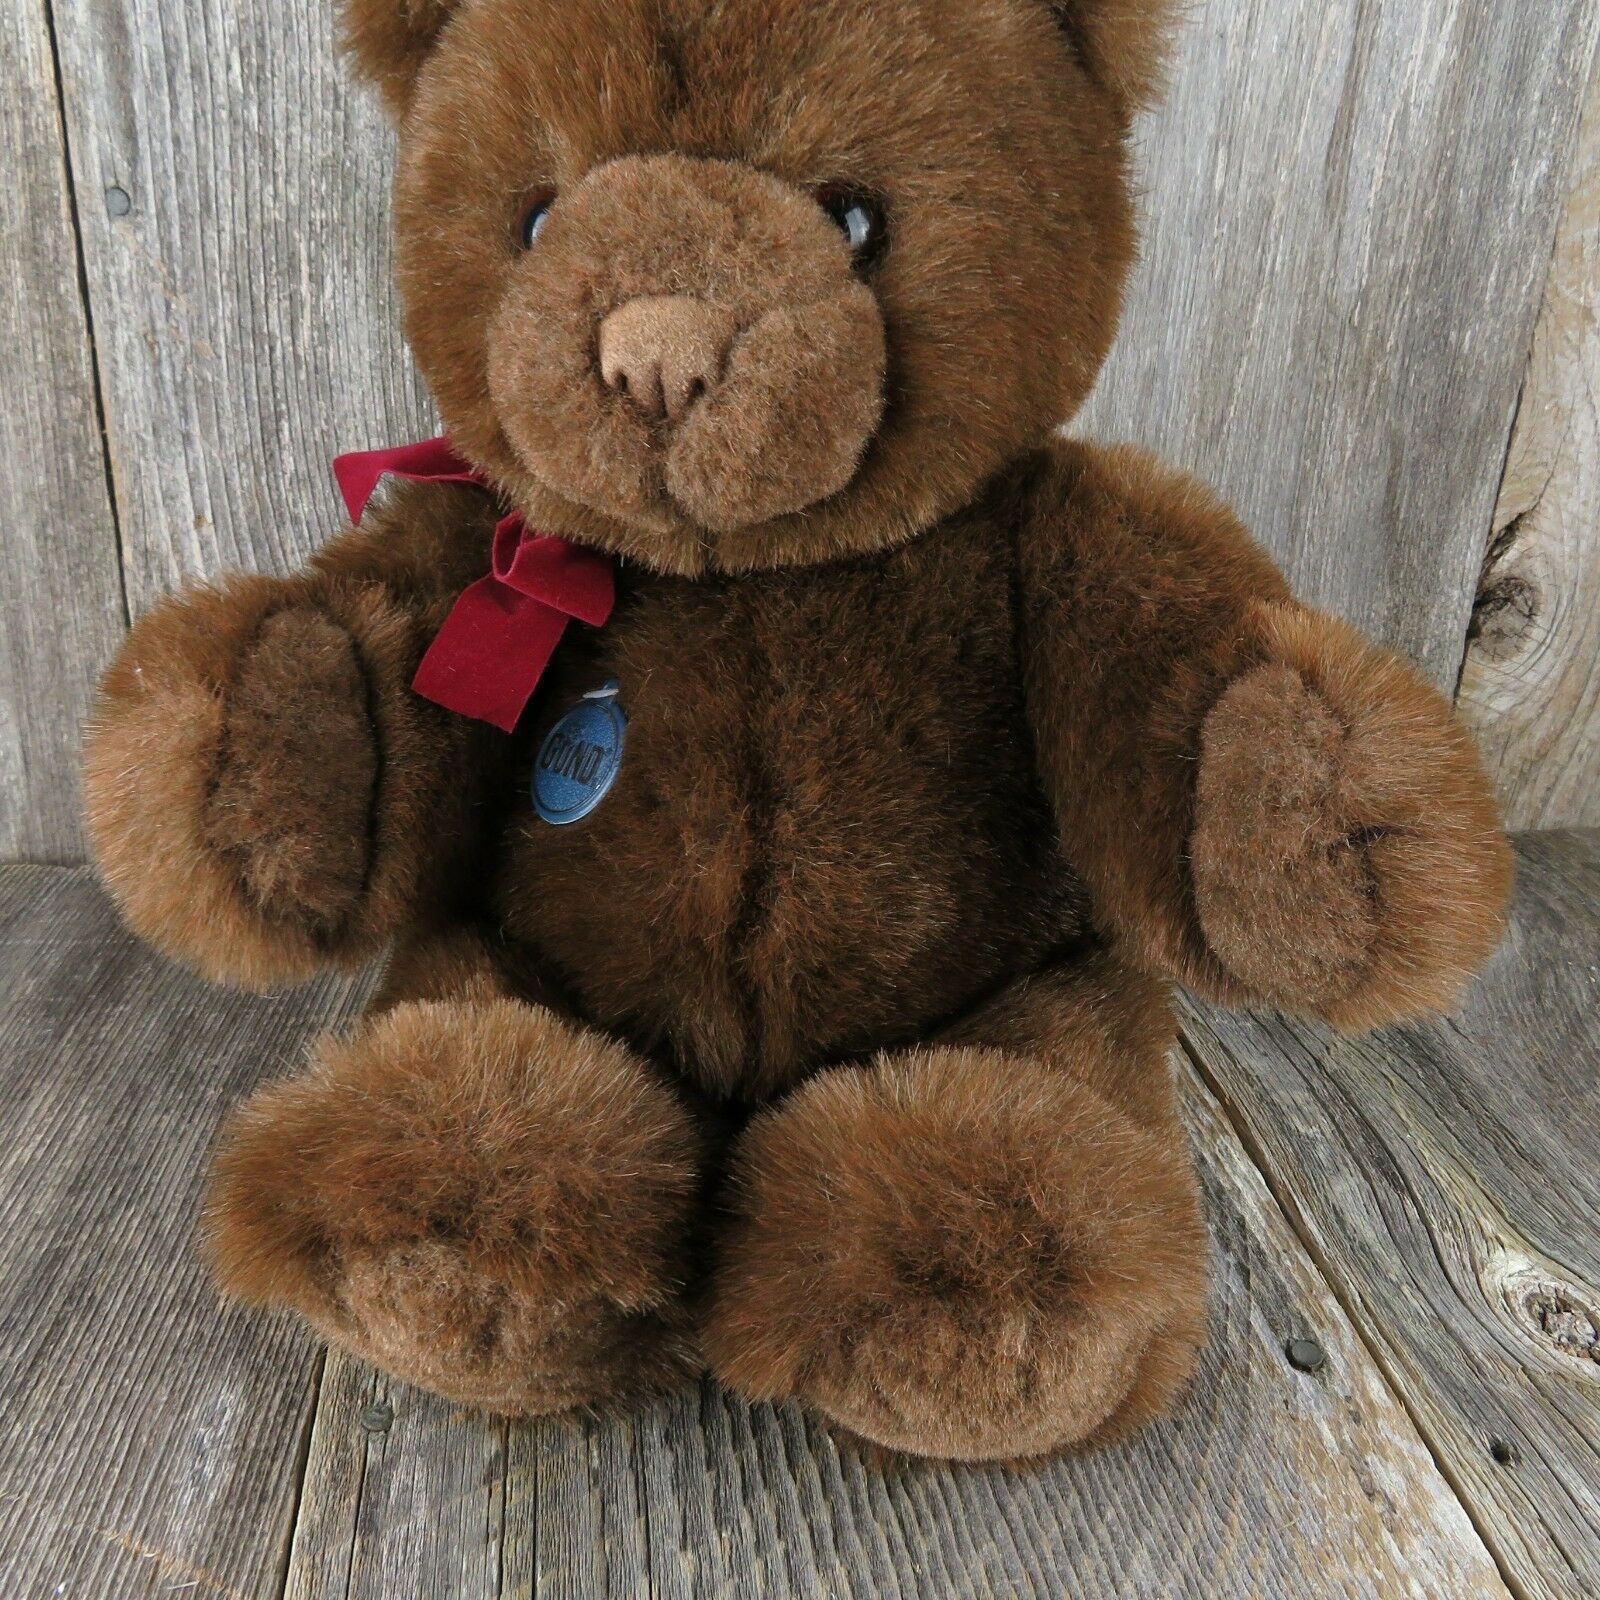 Vintage Teddy Bear Plush Gund Stuffed Animal Collector Classic 1983 Toy Doll - At Grandma's Table